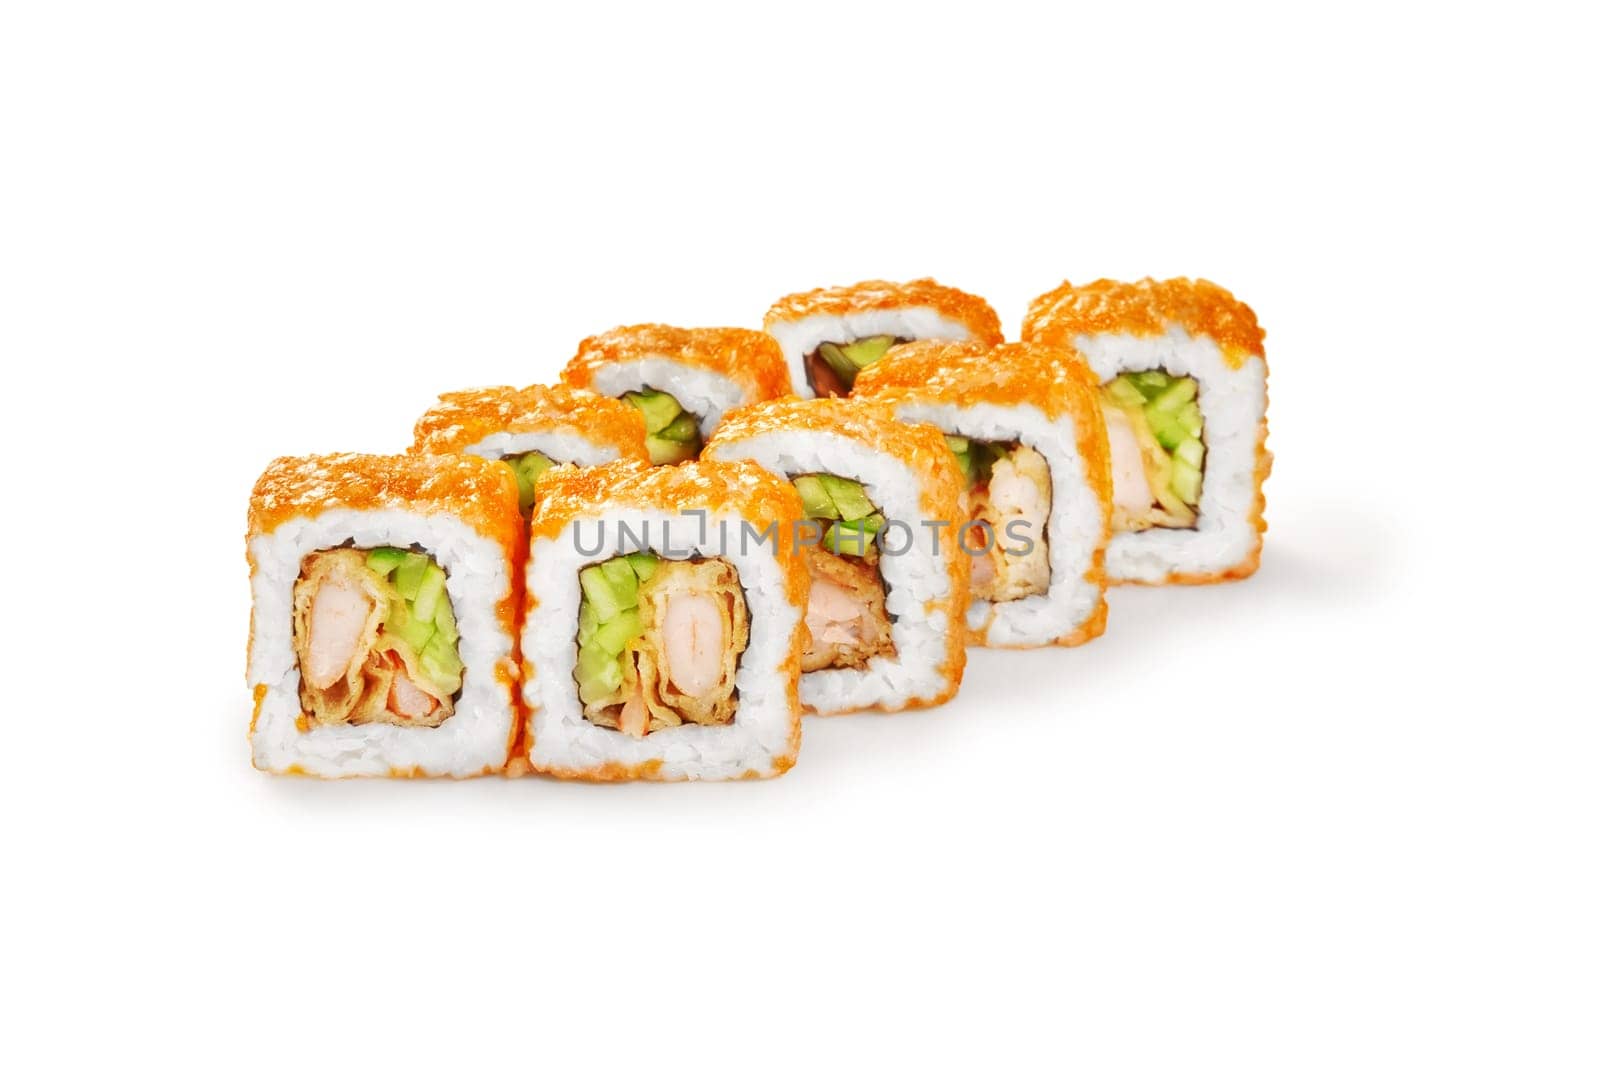 Appetizing tobiko coated sushi rolls filled with tempura shrimp and cucumber, presented isolated on white. Japanese style cuisine